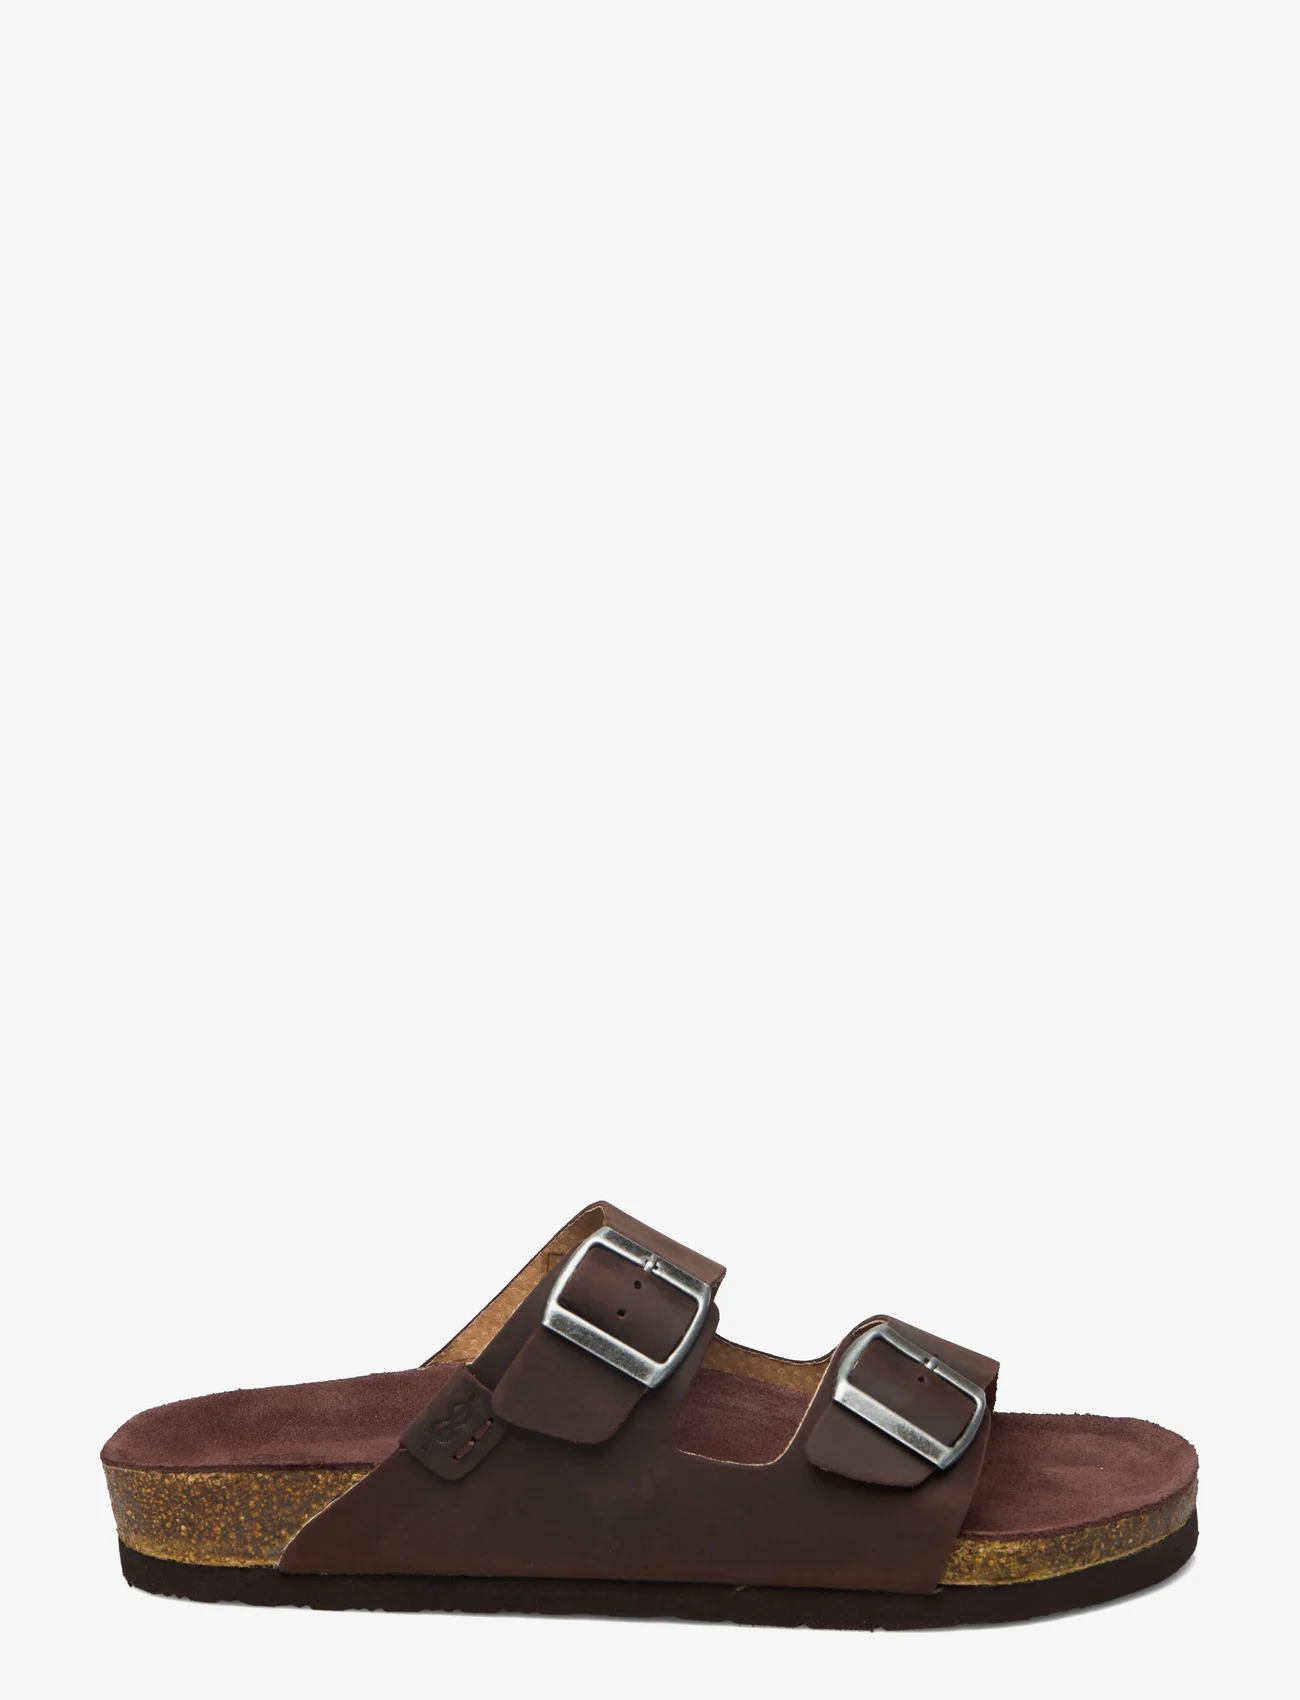 Marstrand - VANT MARSTRAND - sandals - dark brown - 1